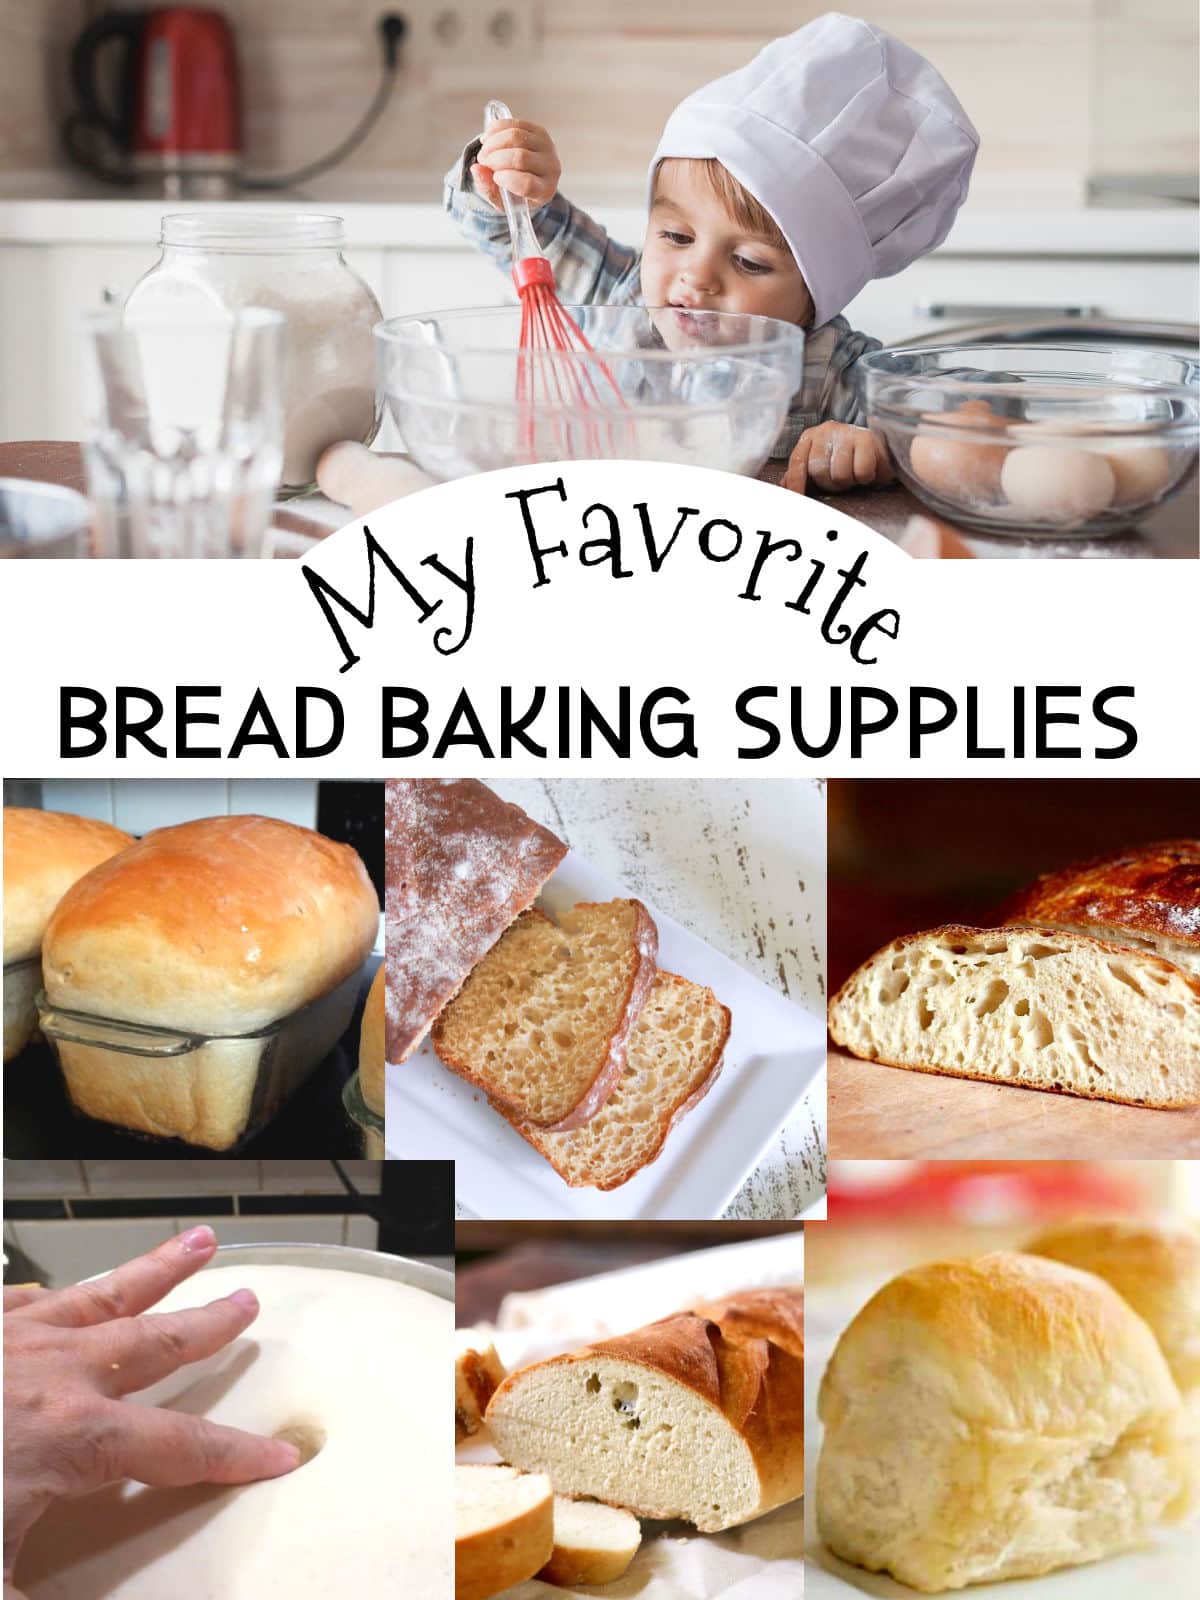 https://www.restlesschipotle.com/wp-content/uploads/2021/01/bread-baking-supplies.jpg